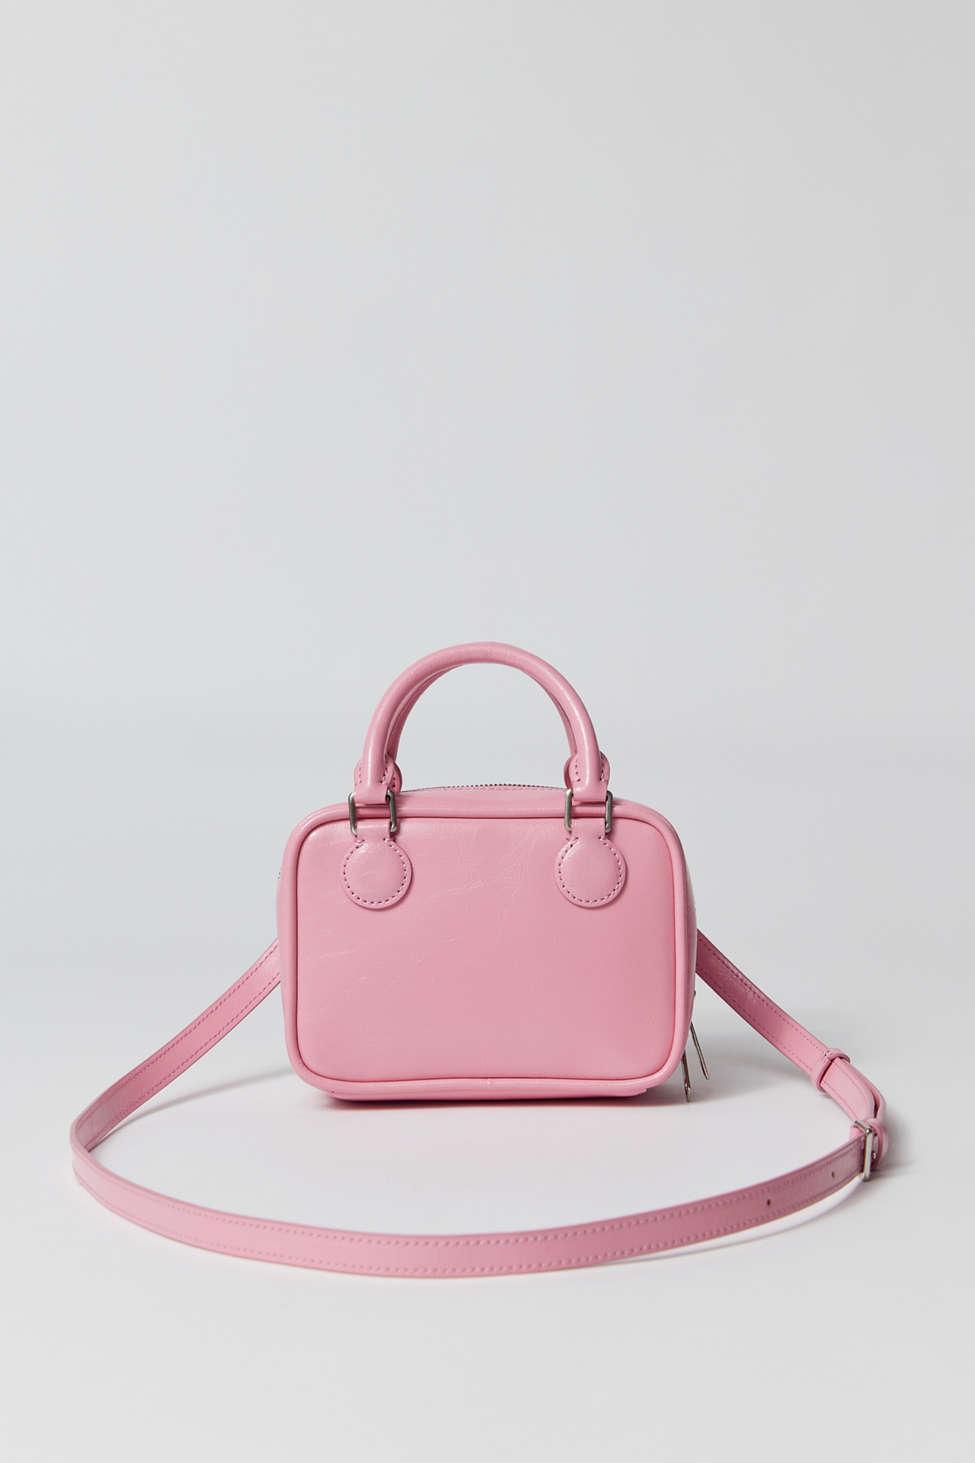 Marge Sherwood Piping Mini Bag in Pink